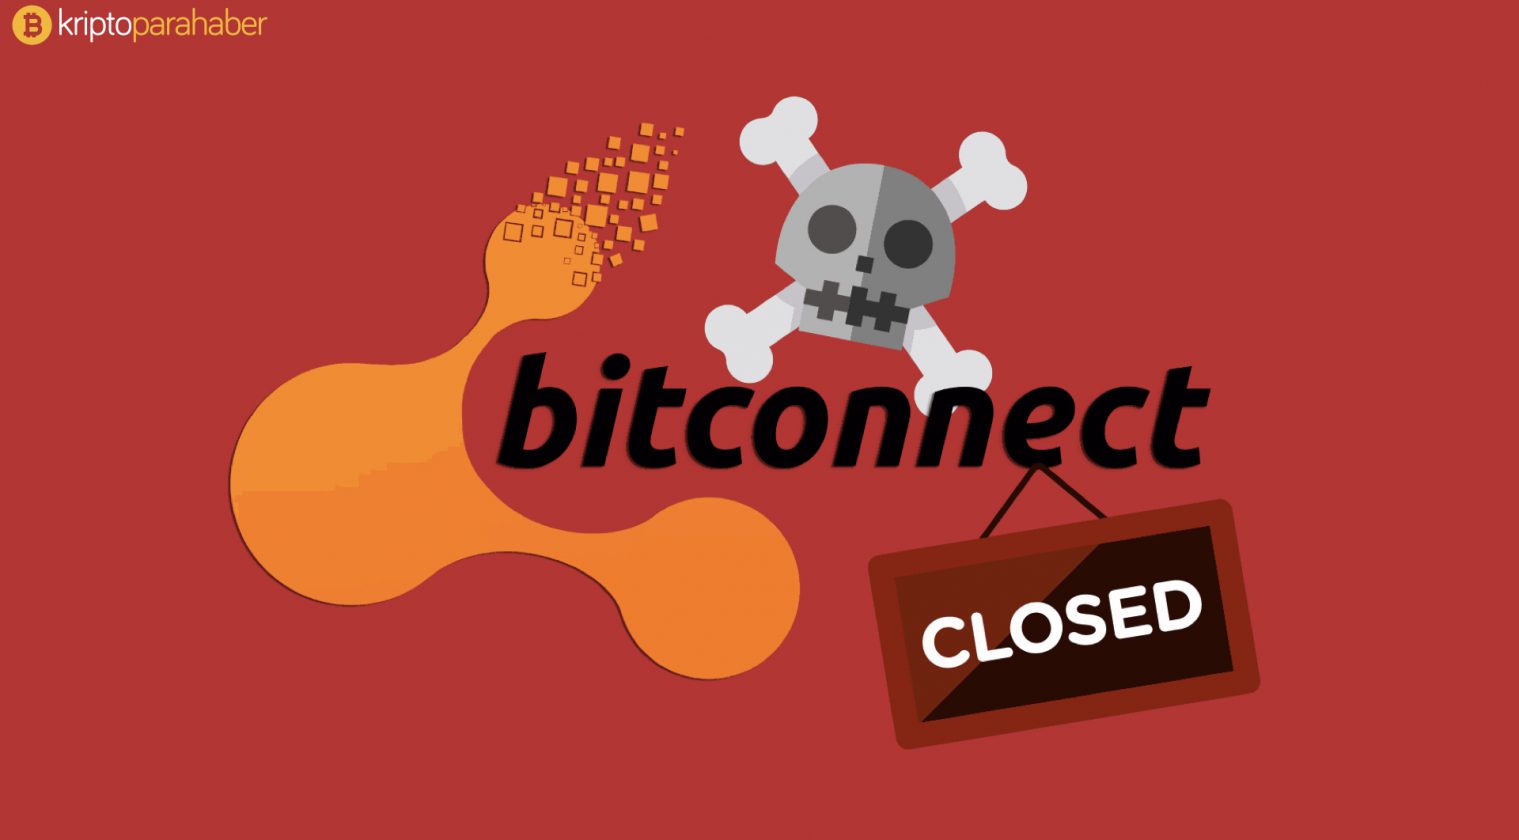 Bitconnect işlem gördüğü son borsadan da çıkarıldı.